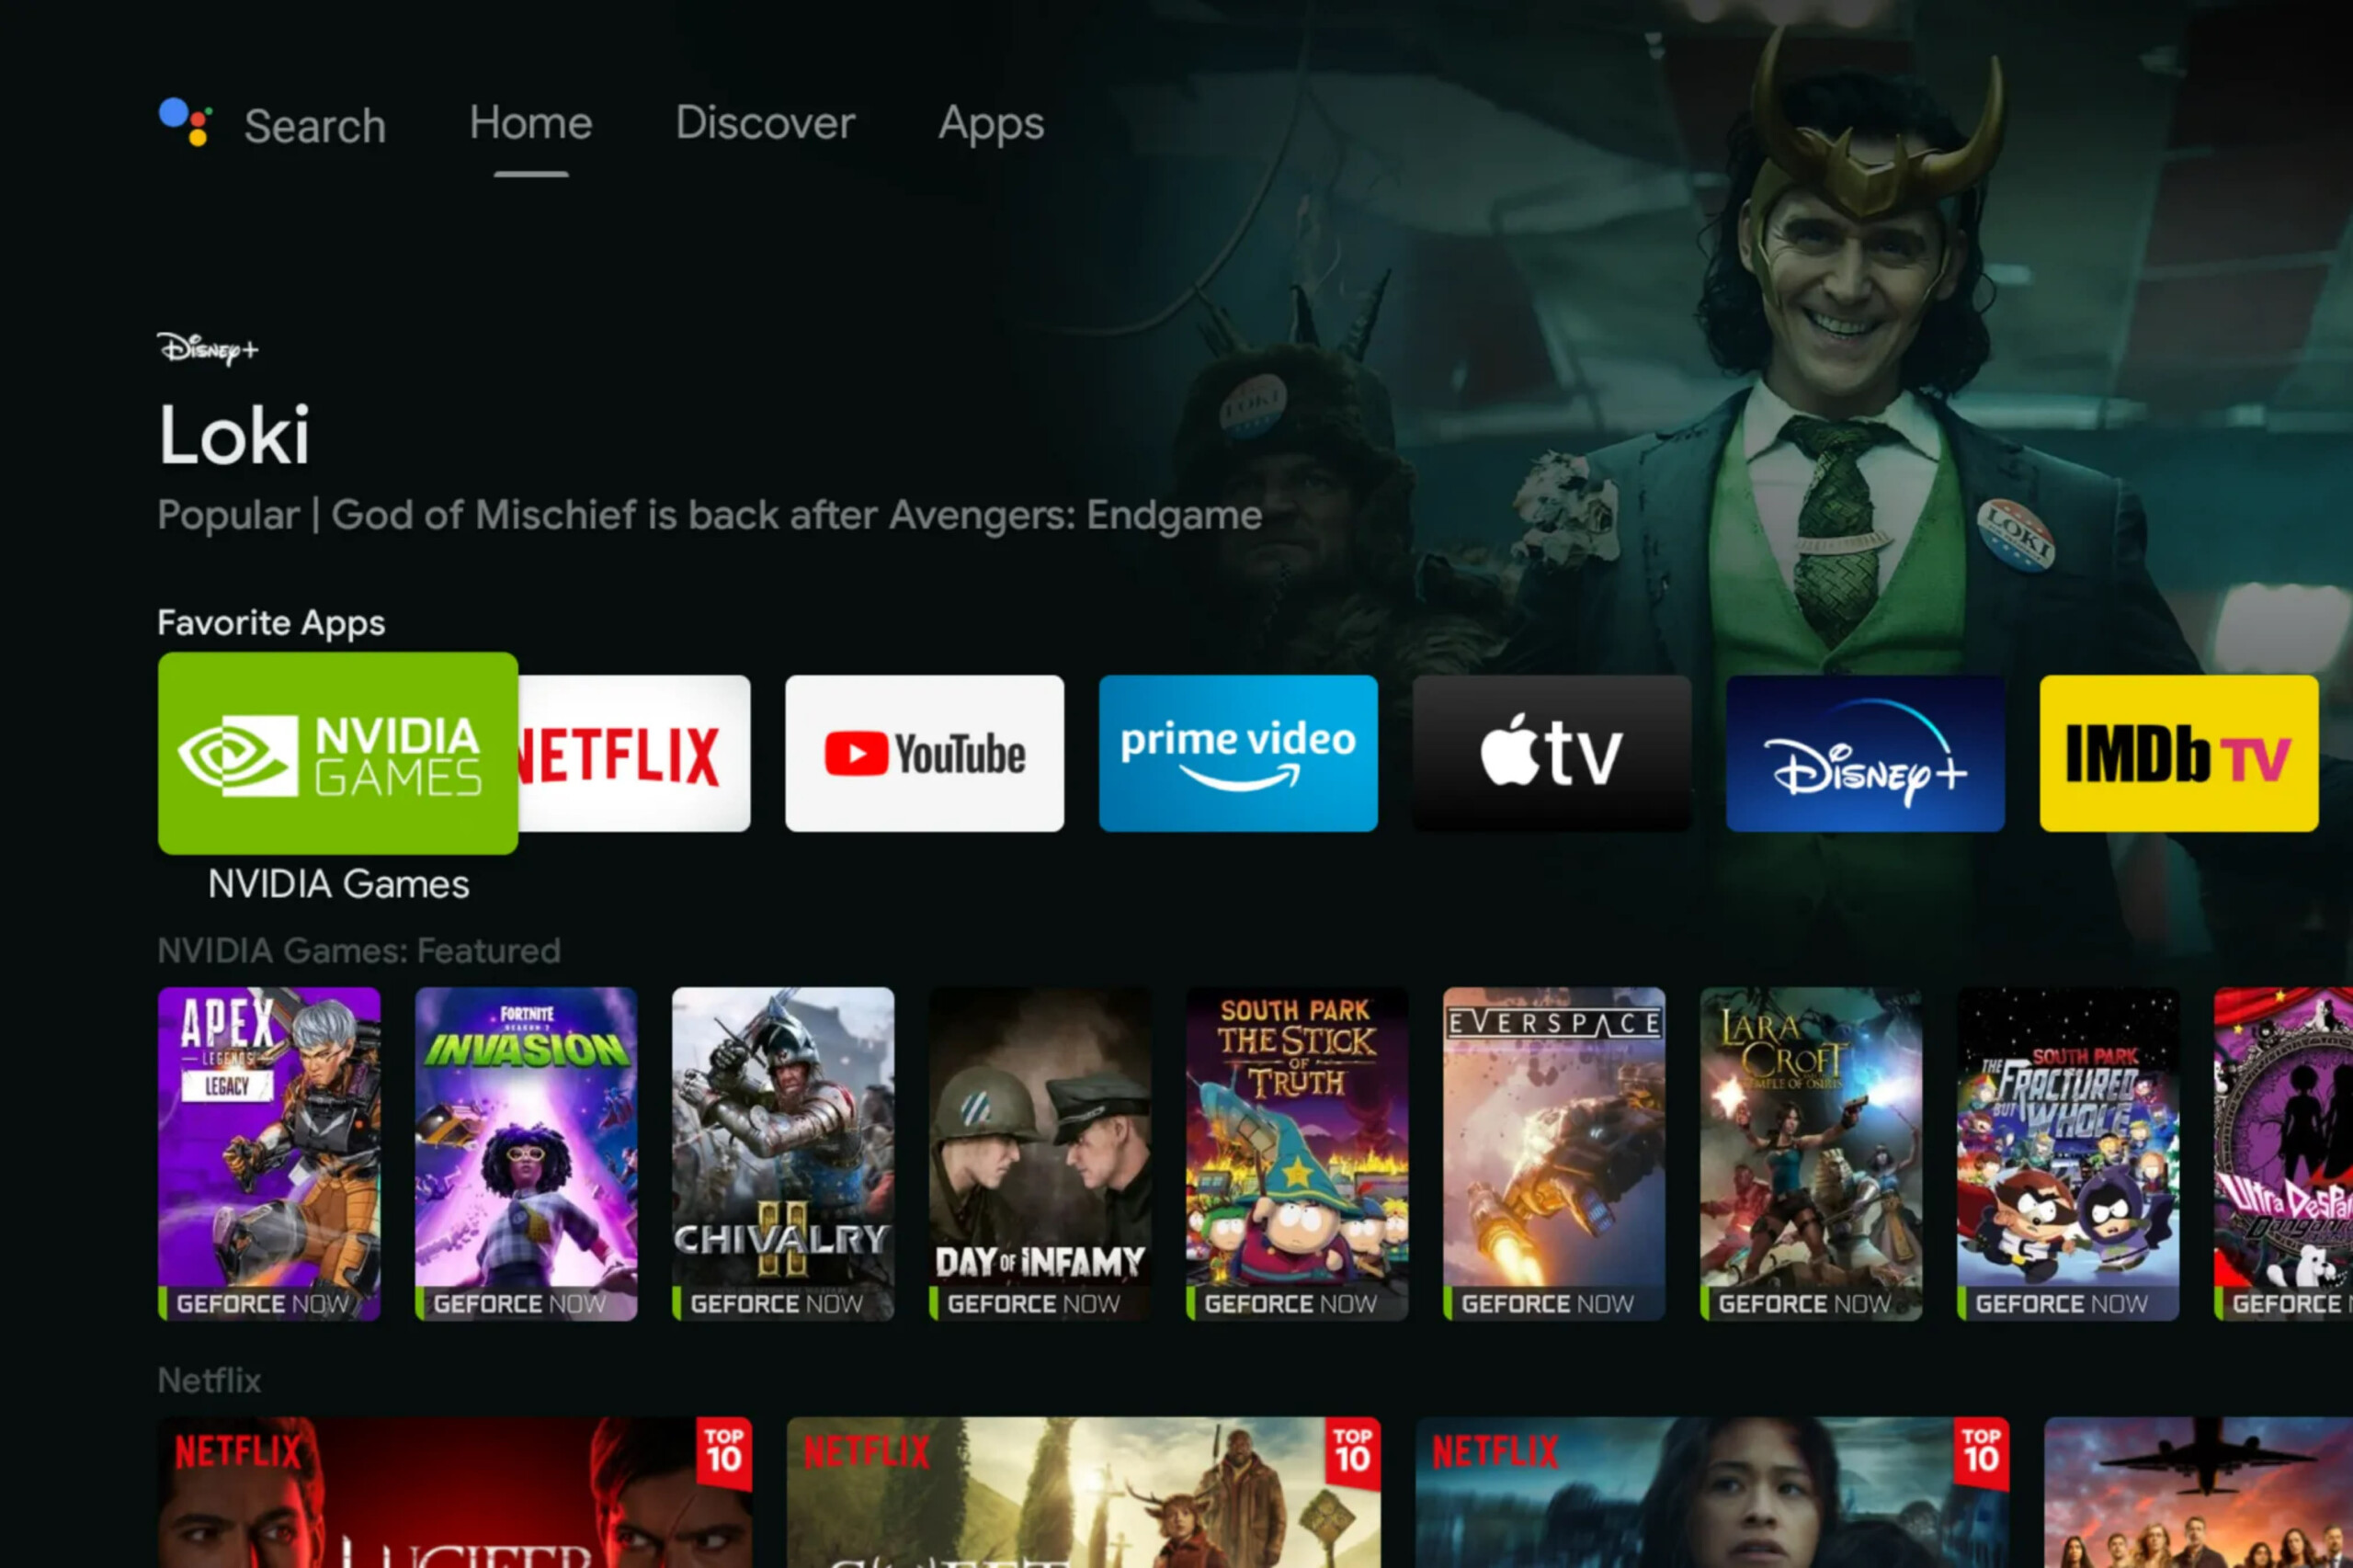 La Nvidia Shield TV débute sa mue d&rsquo;Android TV vers Google TV